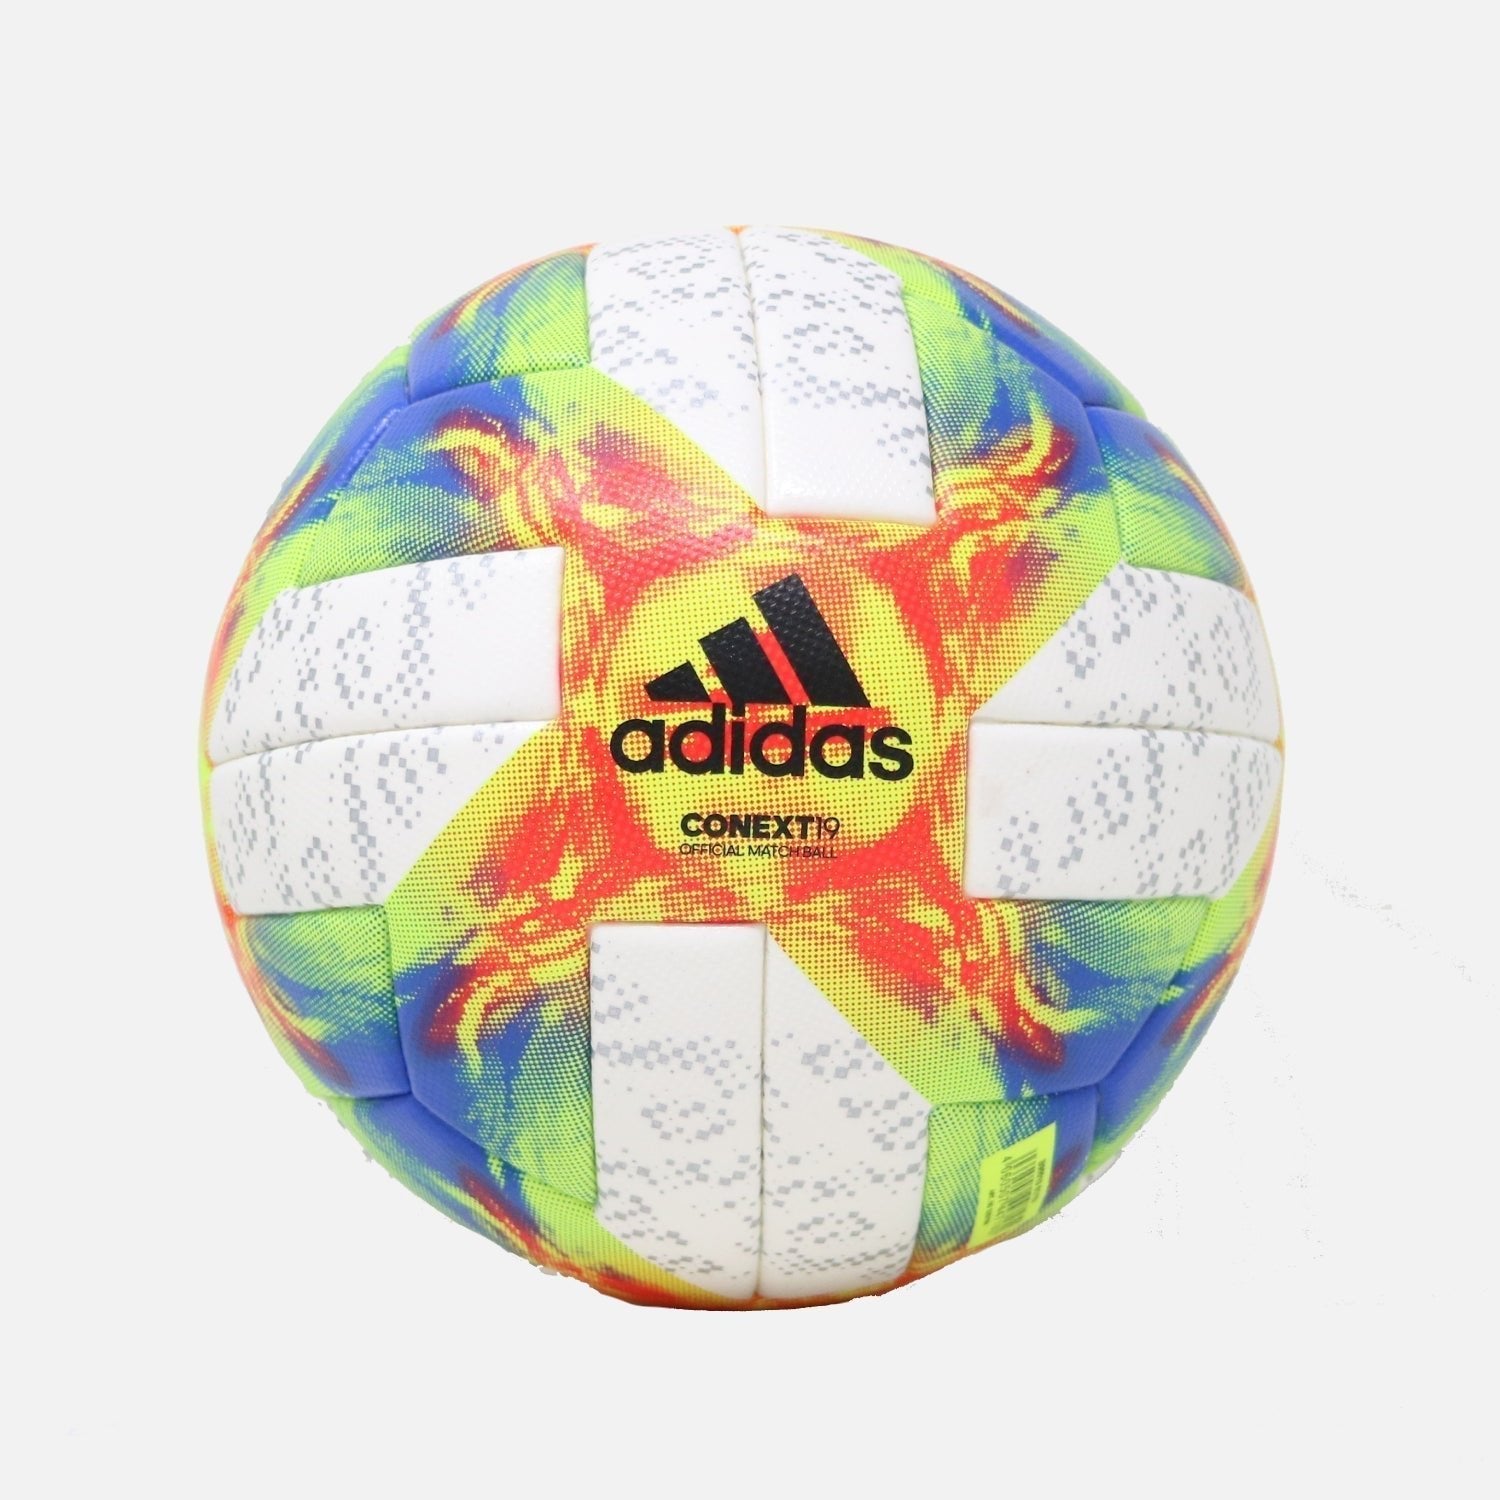 Adidas Conext 19 Official Match Ball Size 5